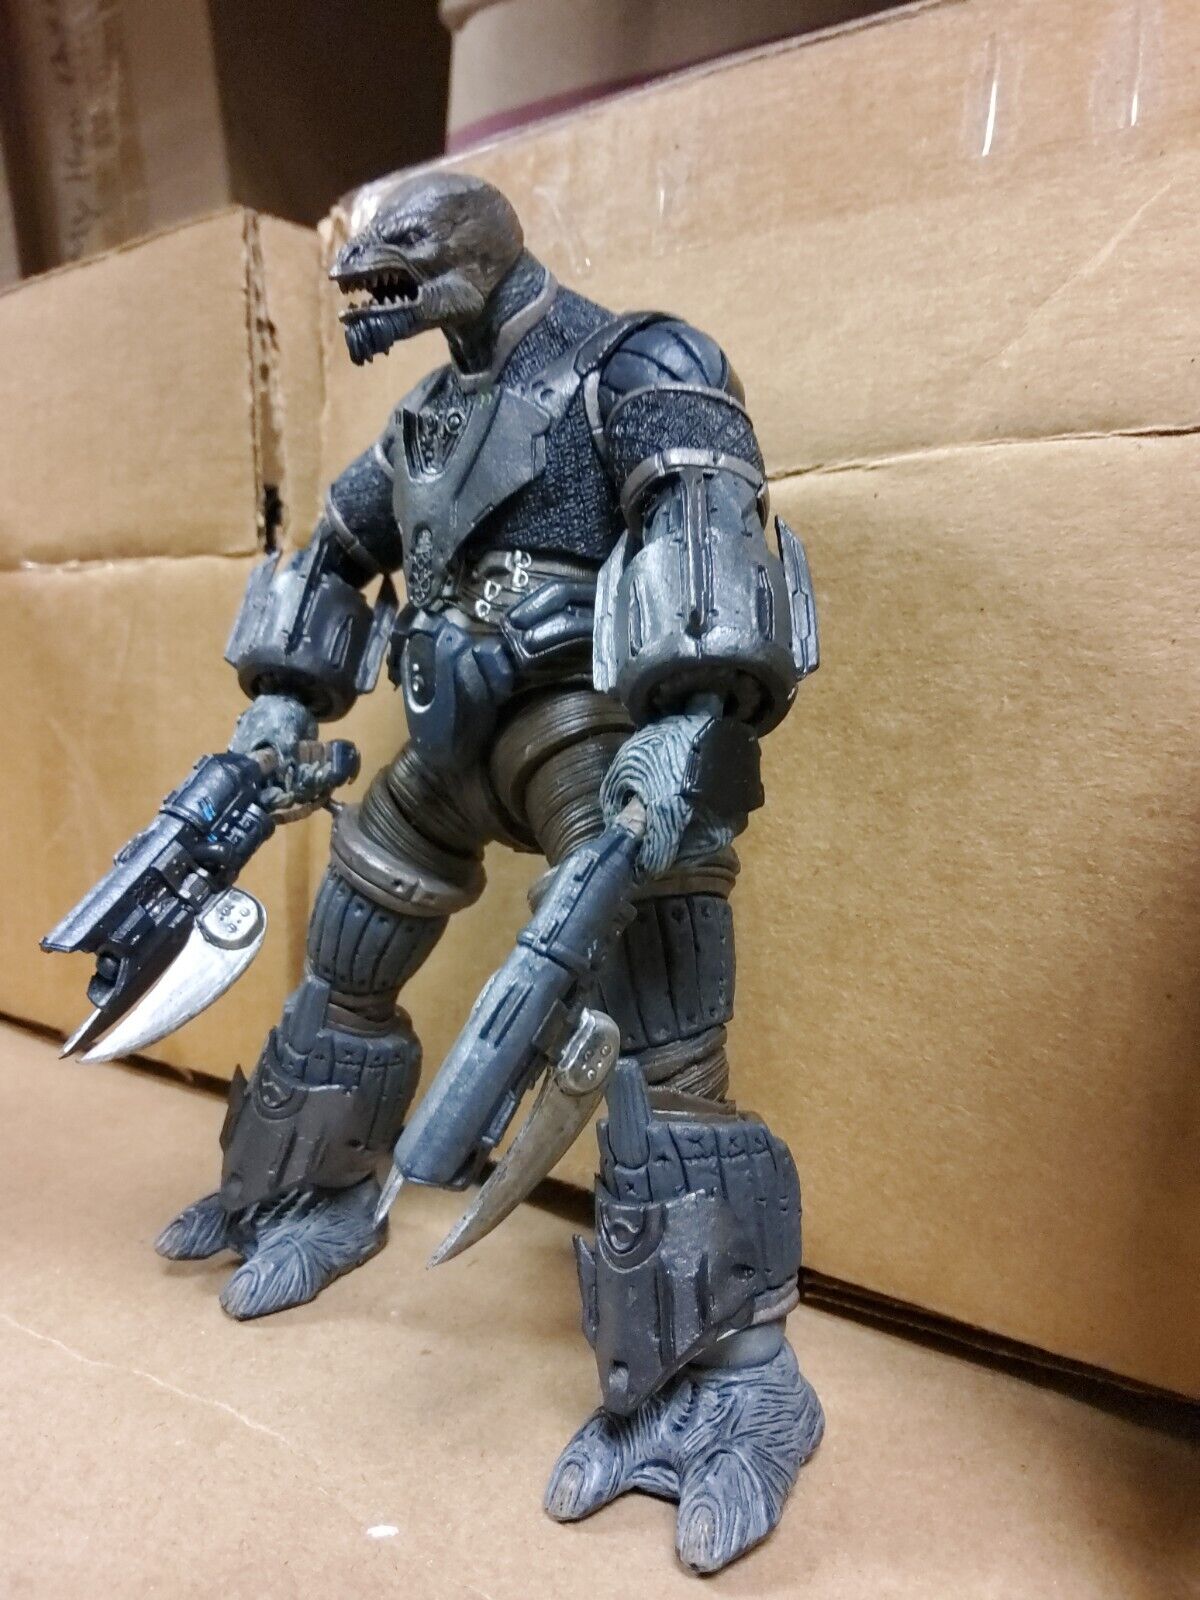 Halo 3 Brute Stalker Action Figure w/ Guns - McFarlane Toys 2008